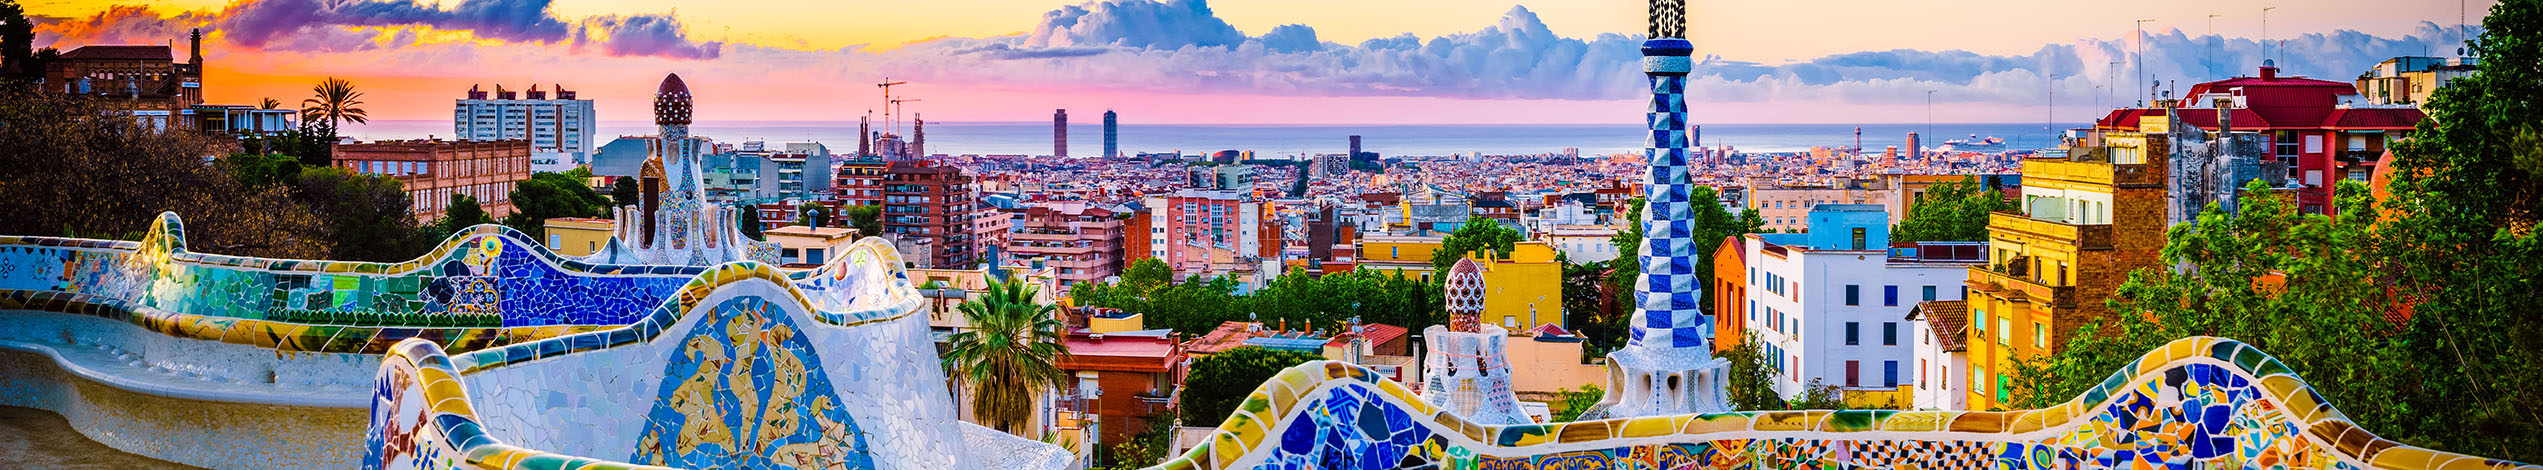 Studieresa till Spanien - Barcelona